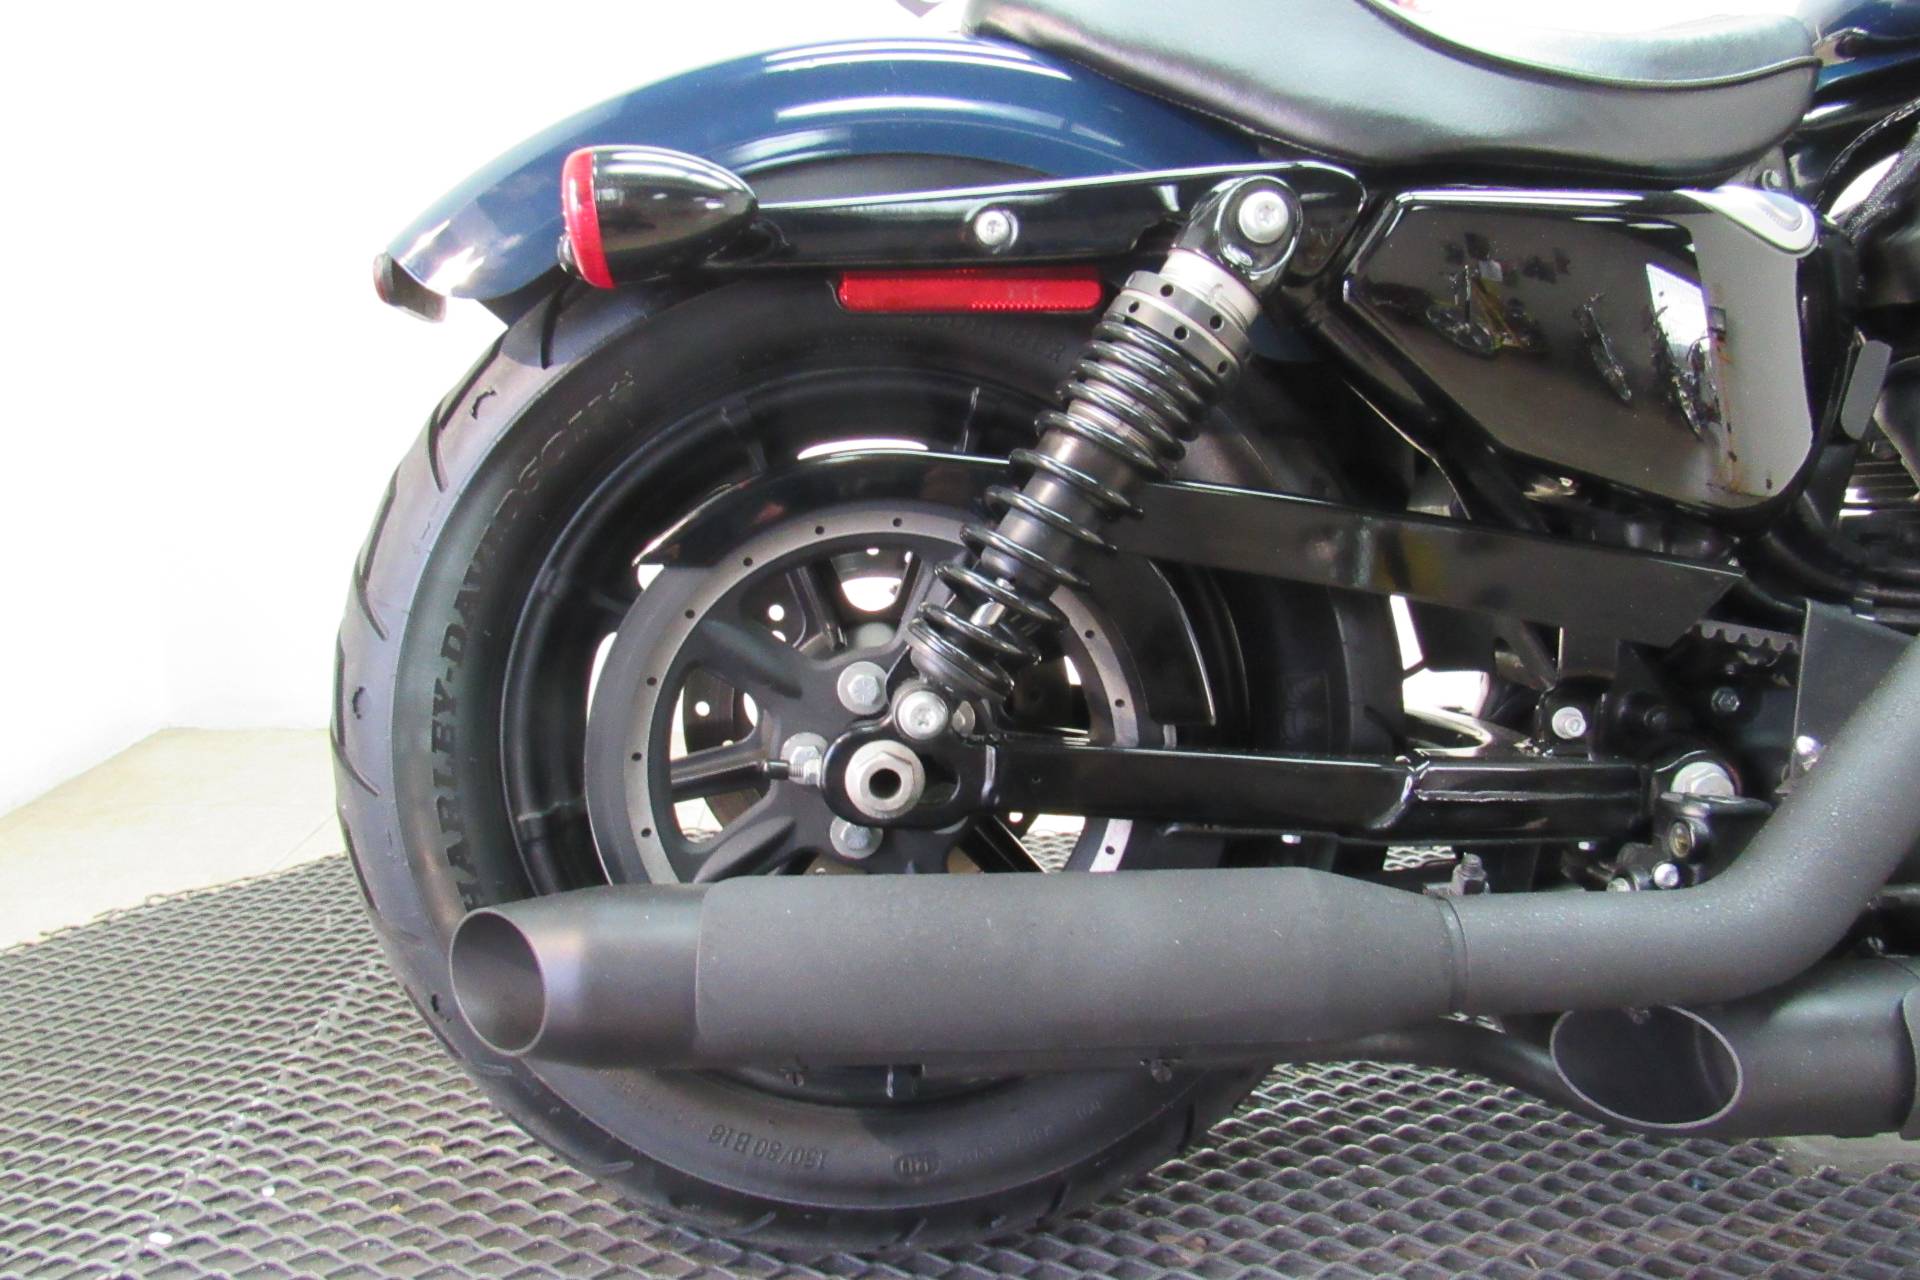 2020 Harley-Davidson Iron 1200™ in Temecula, California - Photo 19